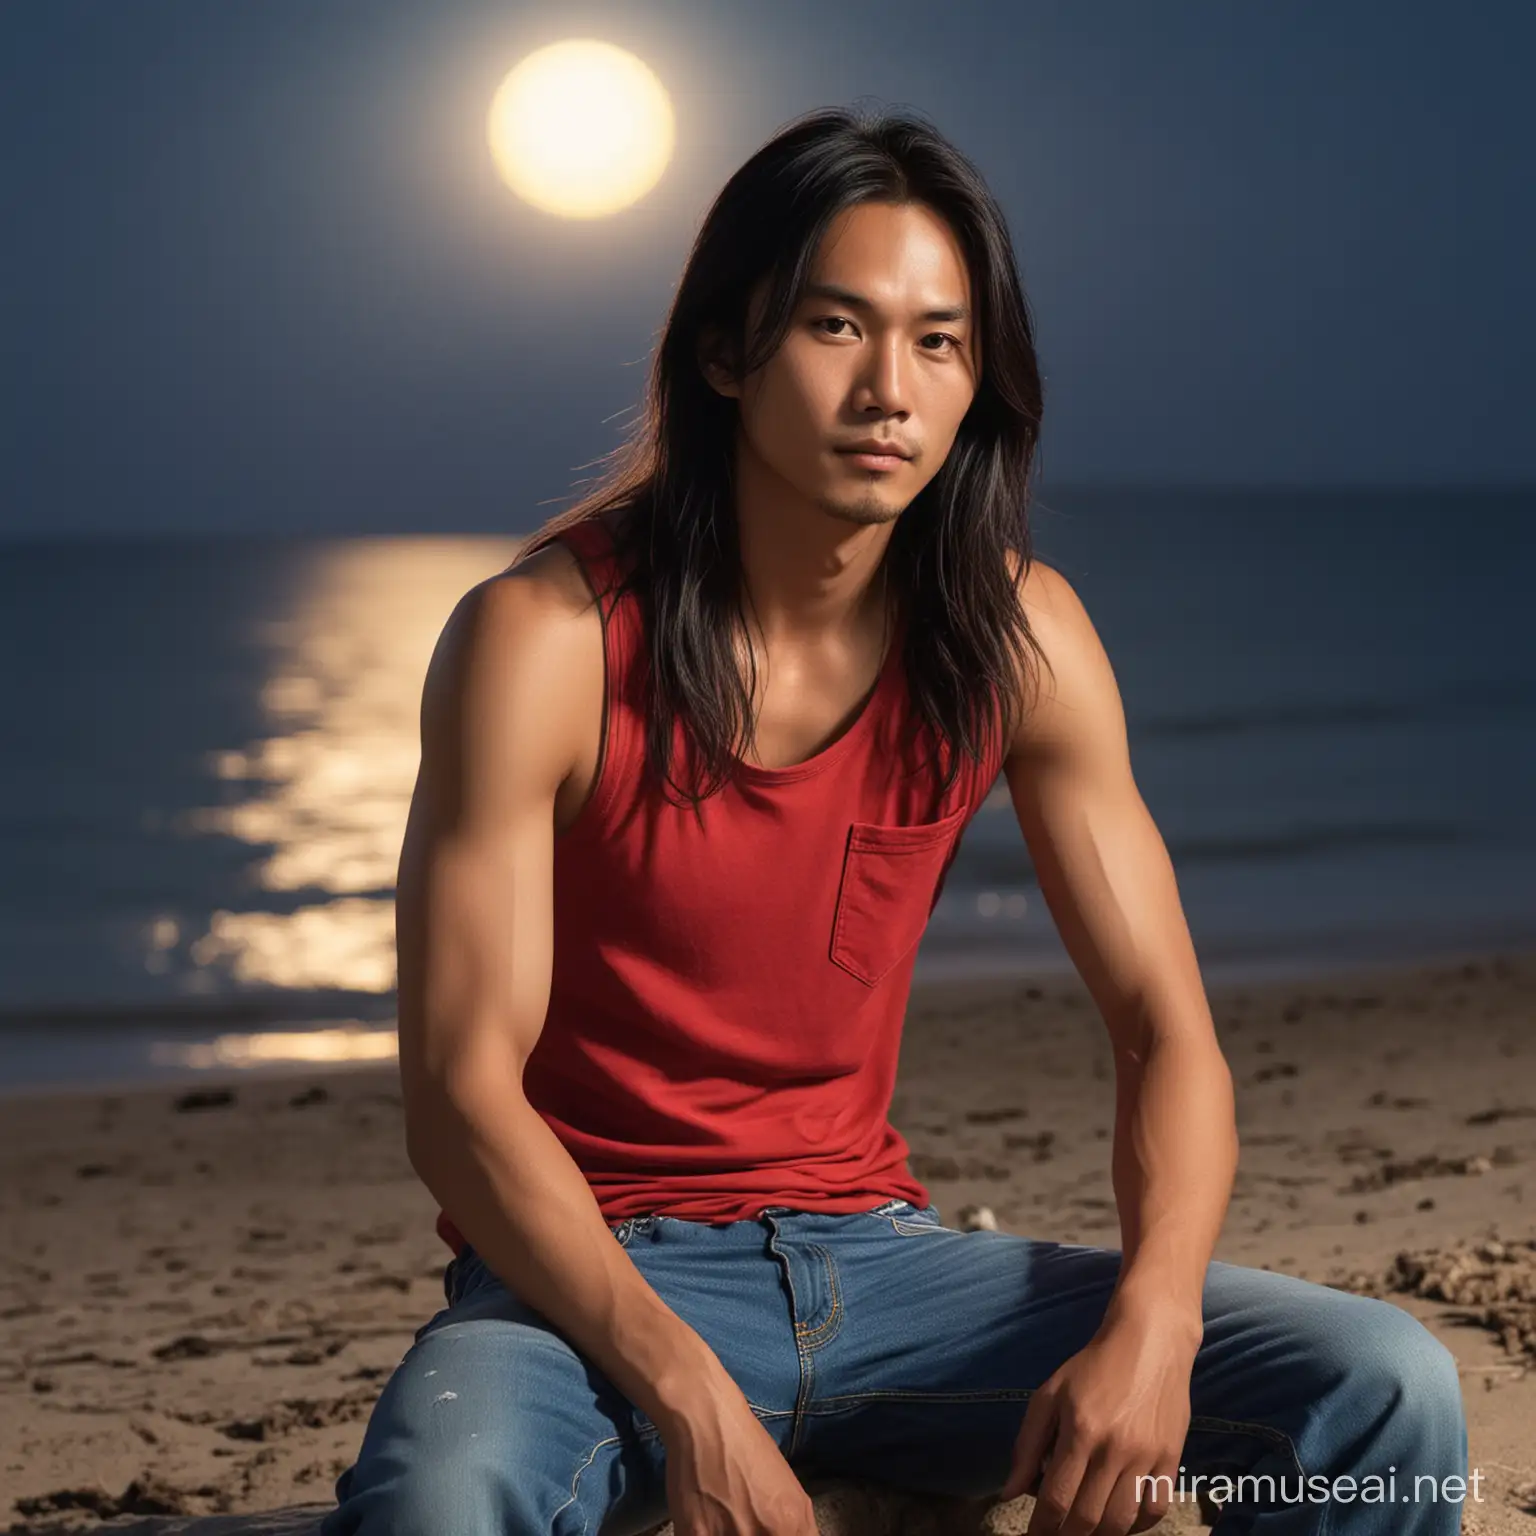 Asian Man Relaxing on Moonlit Beach at Night